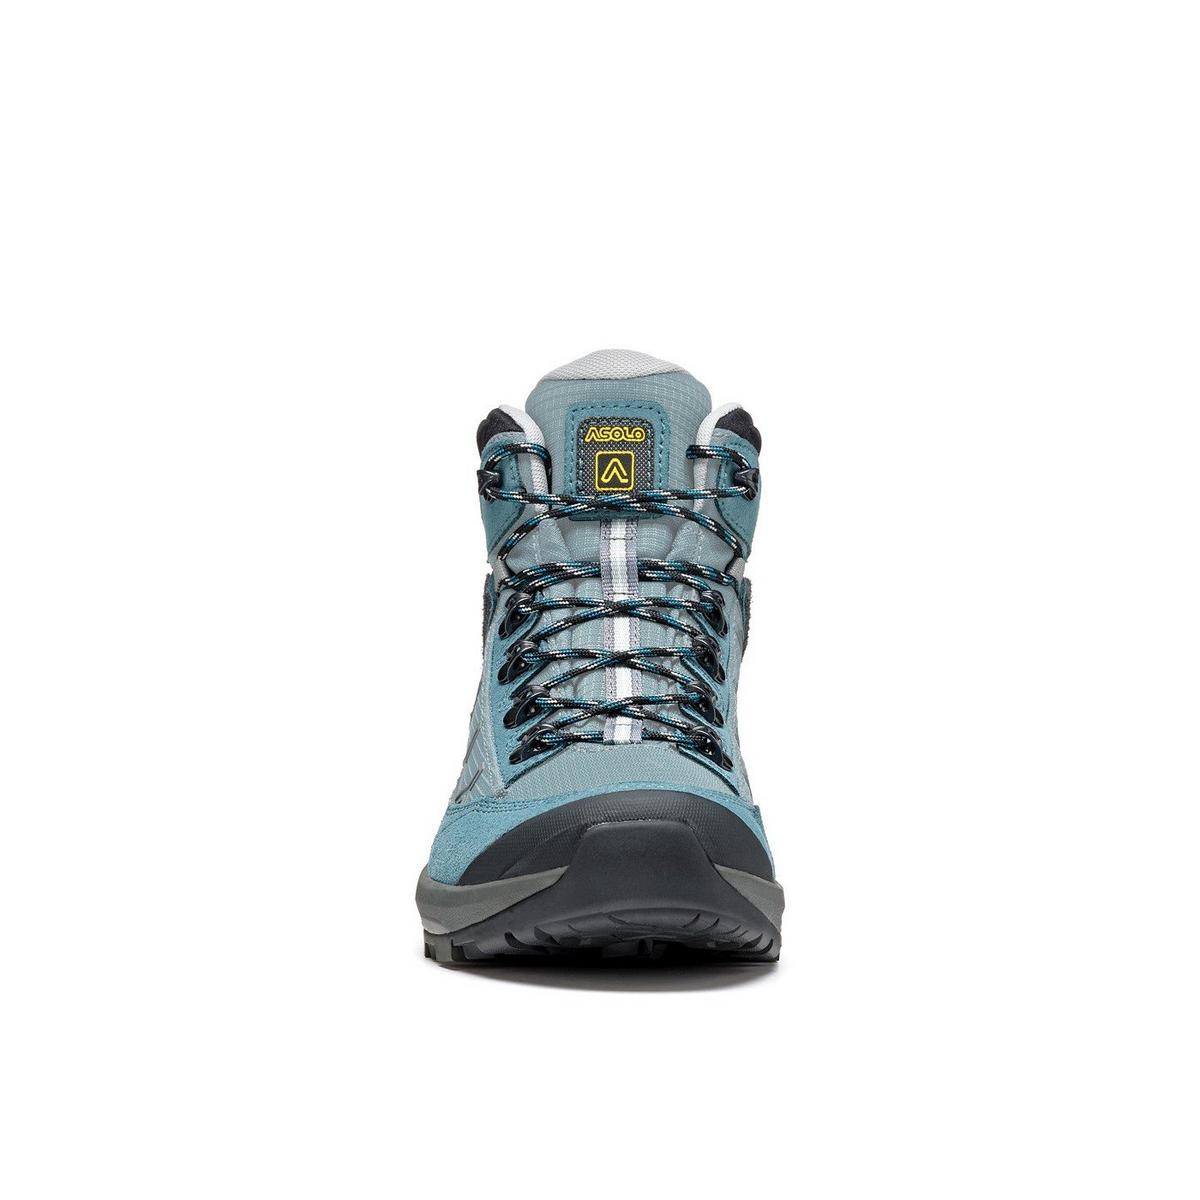 Asolo Women's Falcon Evo GV Walking Boots - Grey